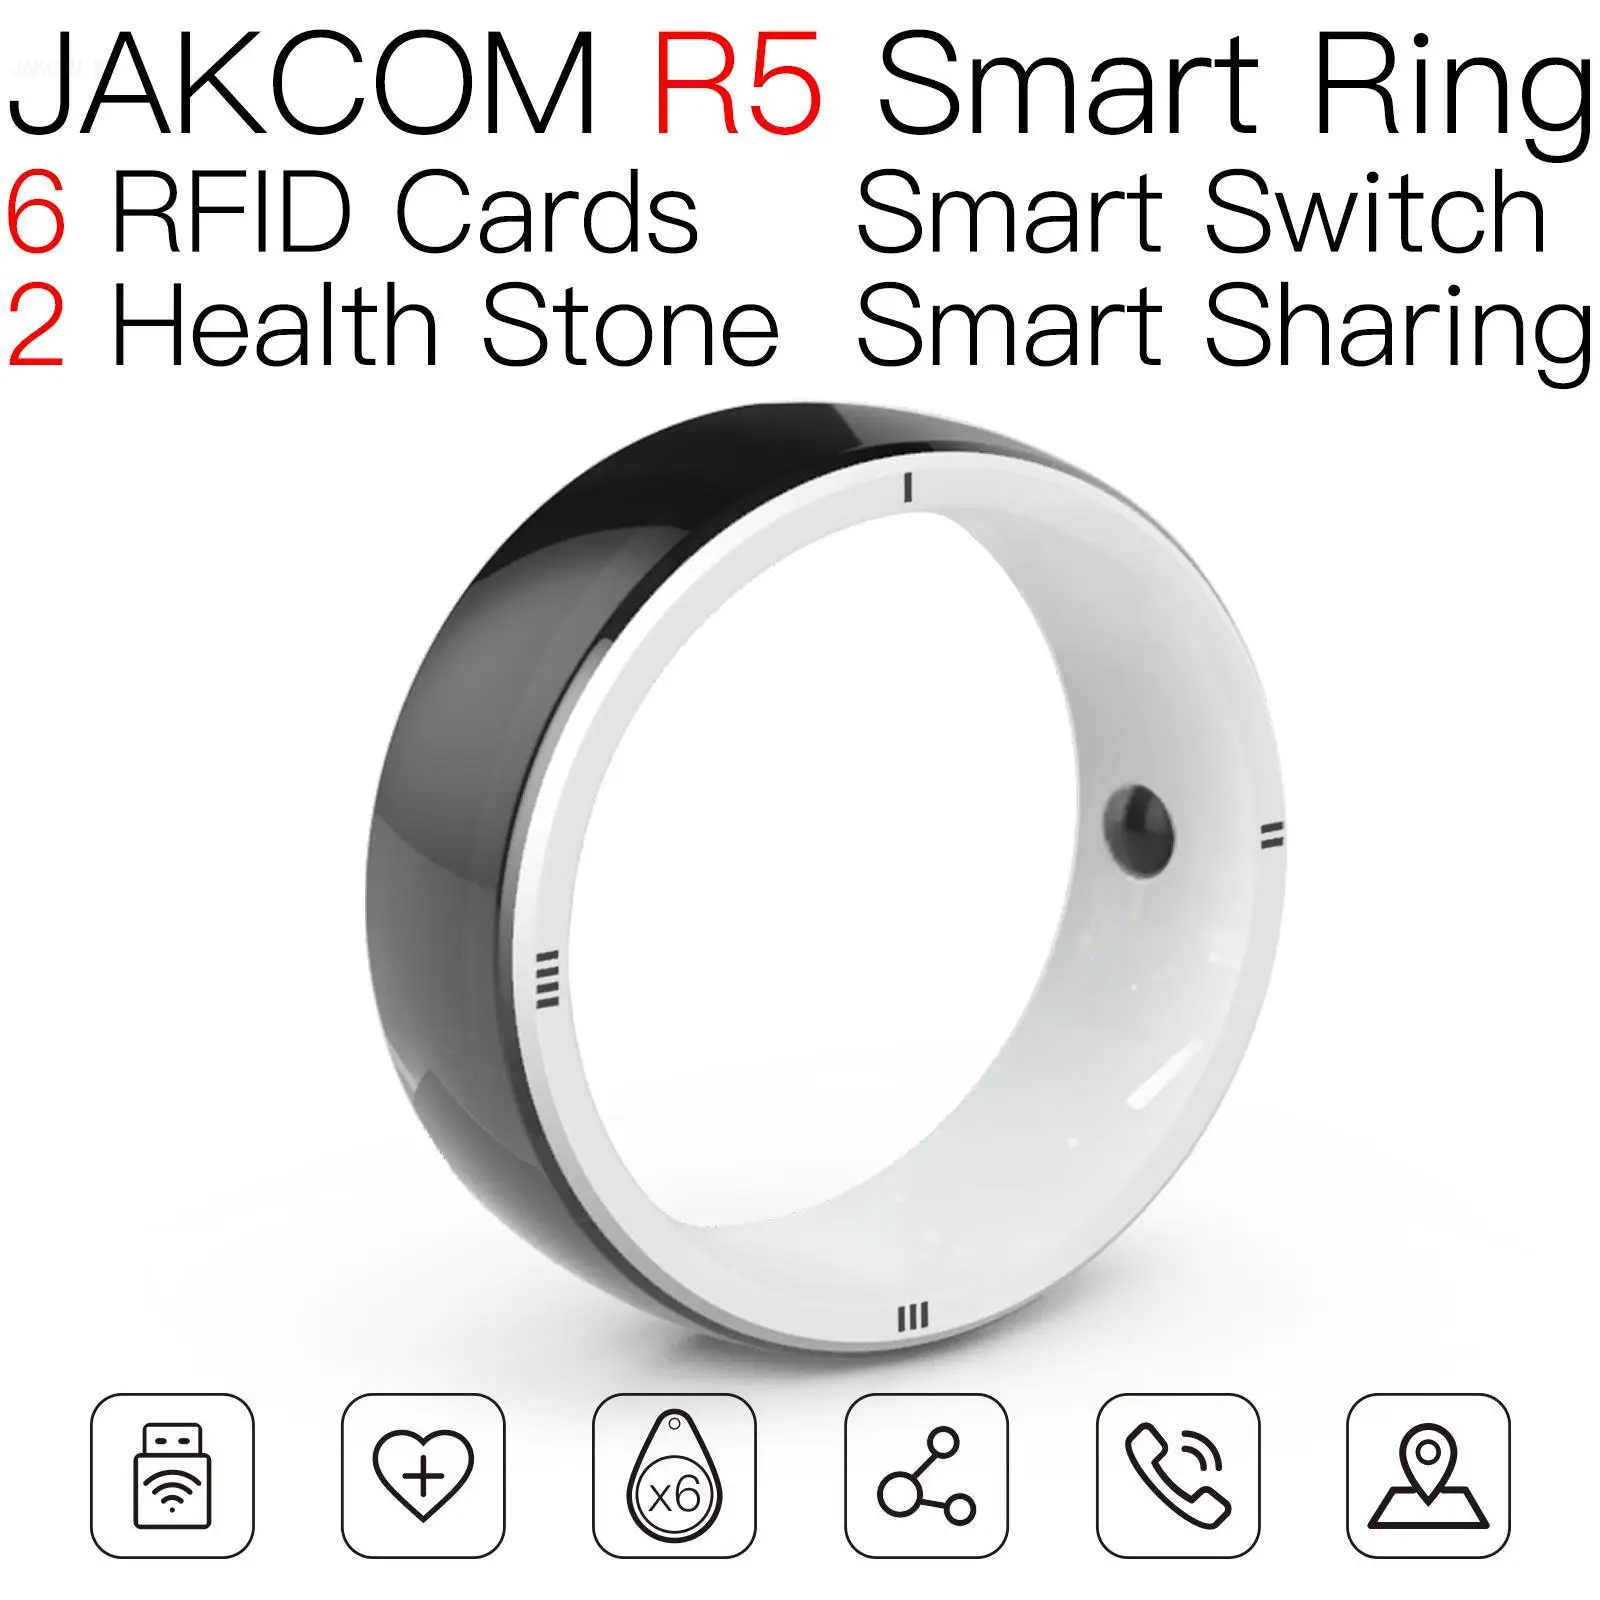 

JAKCOM R5 Smart Ring Super value than antenna rfid tag 5x5 mm card 125khz 100pcs 7byte uid blocker cat dor microchip hbo max